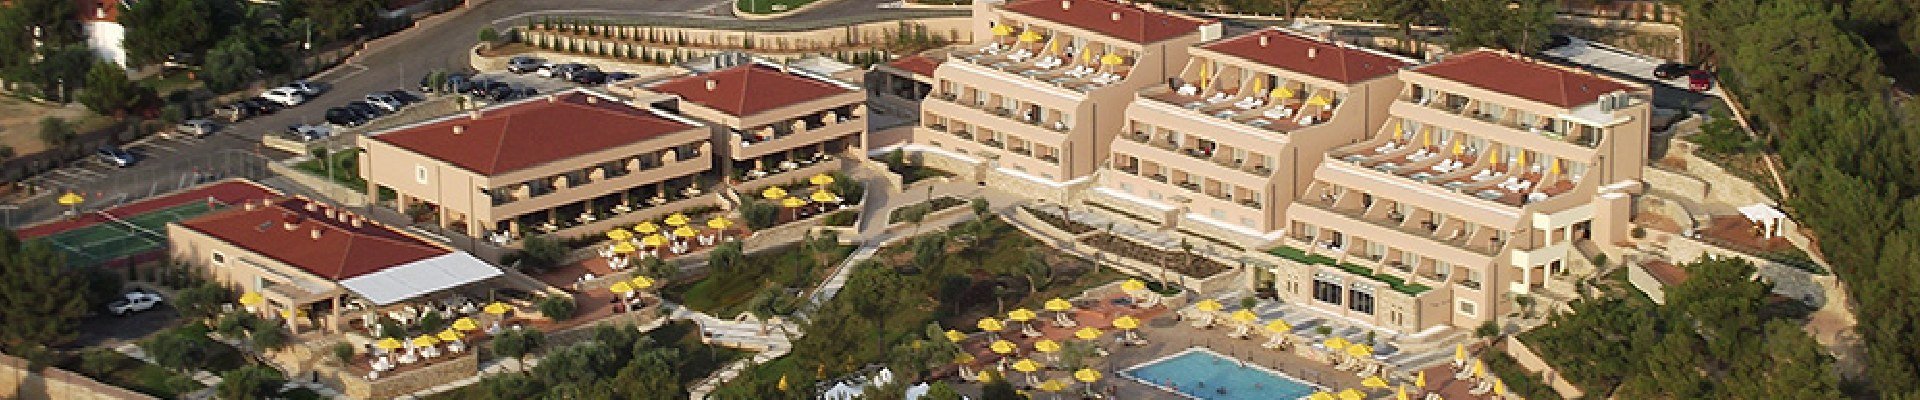 Royal Paradise Resort panorama